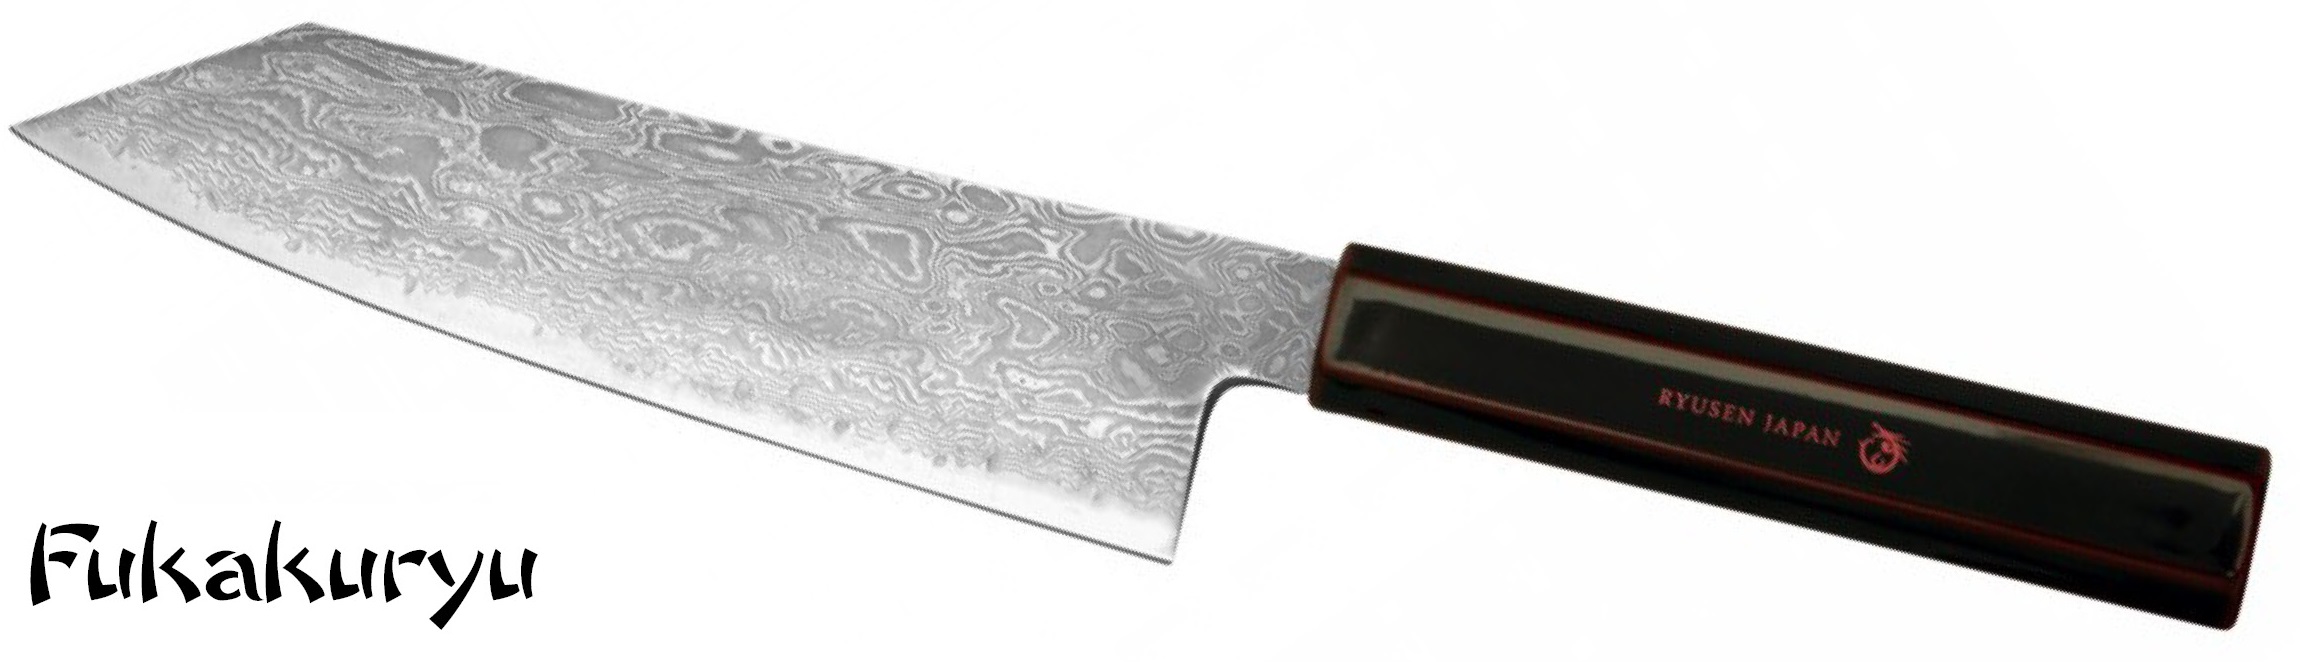 couteau japonais ryusen fukakuryu